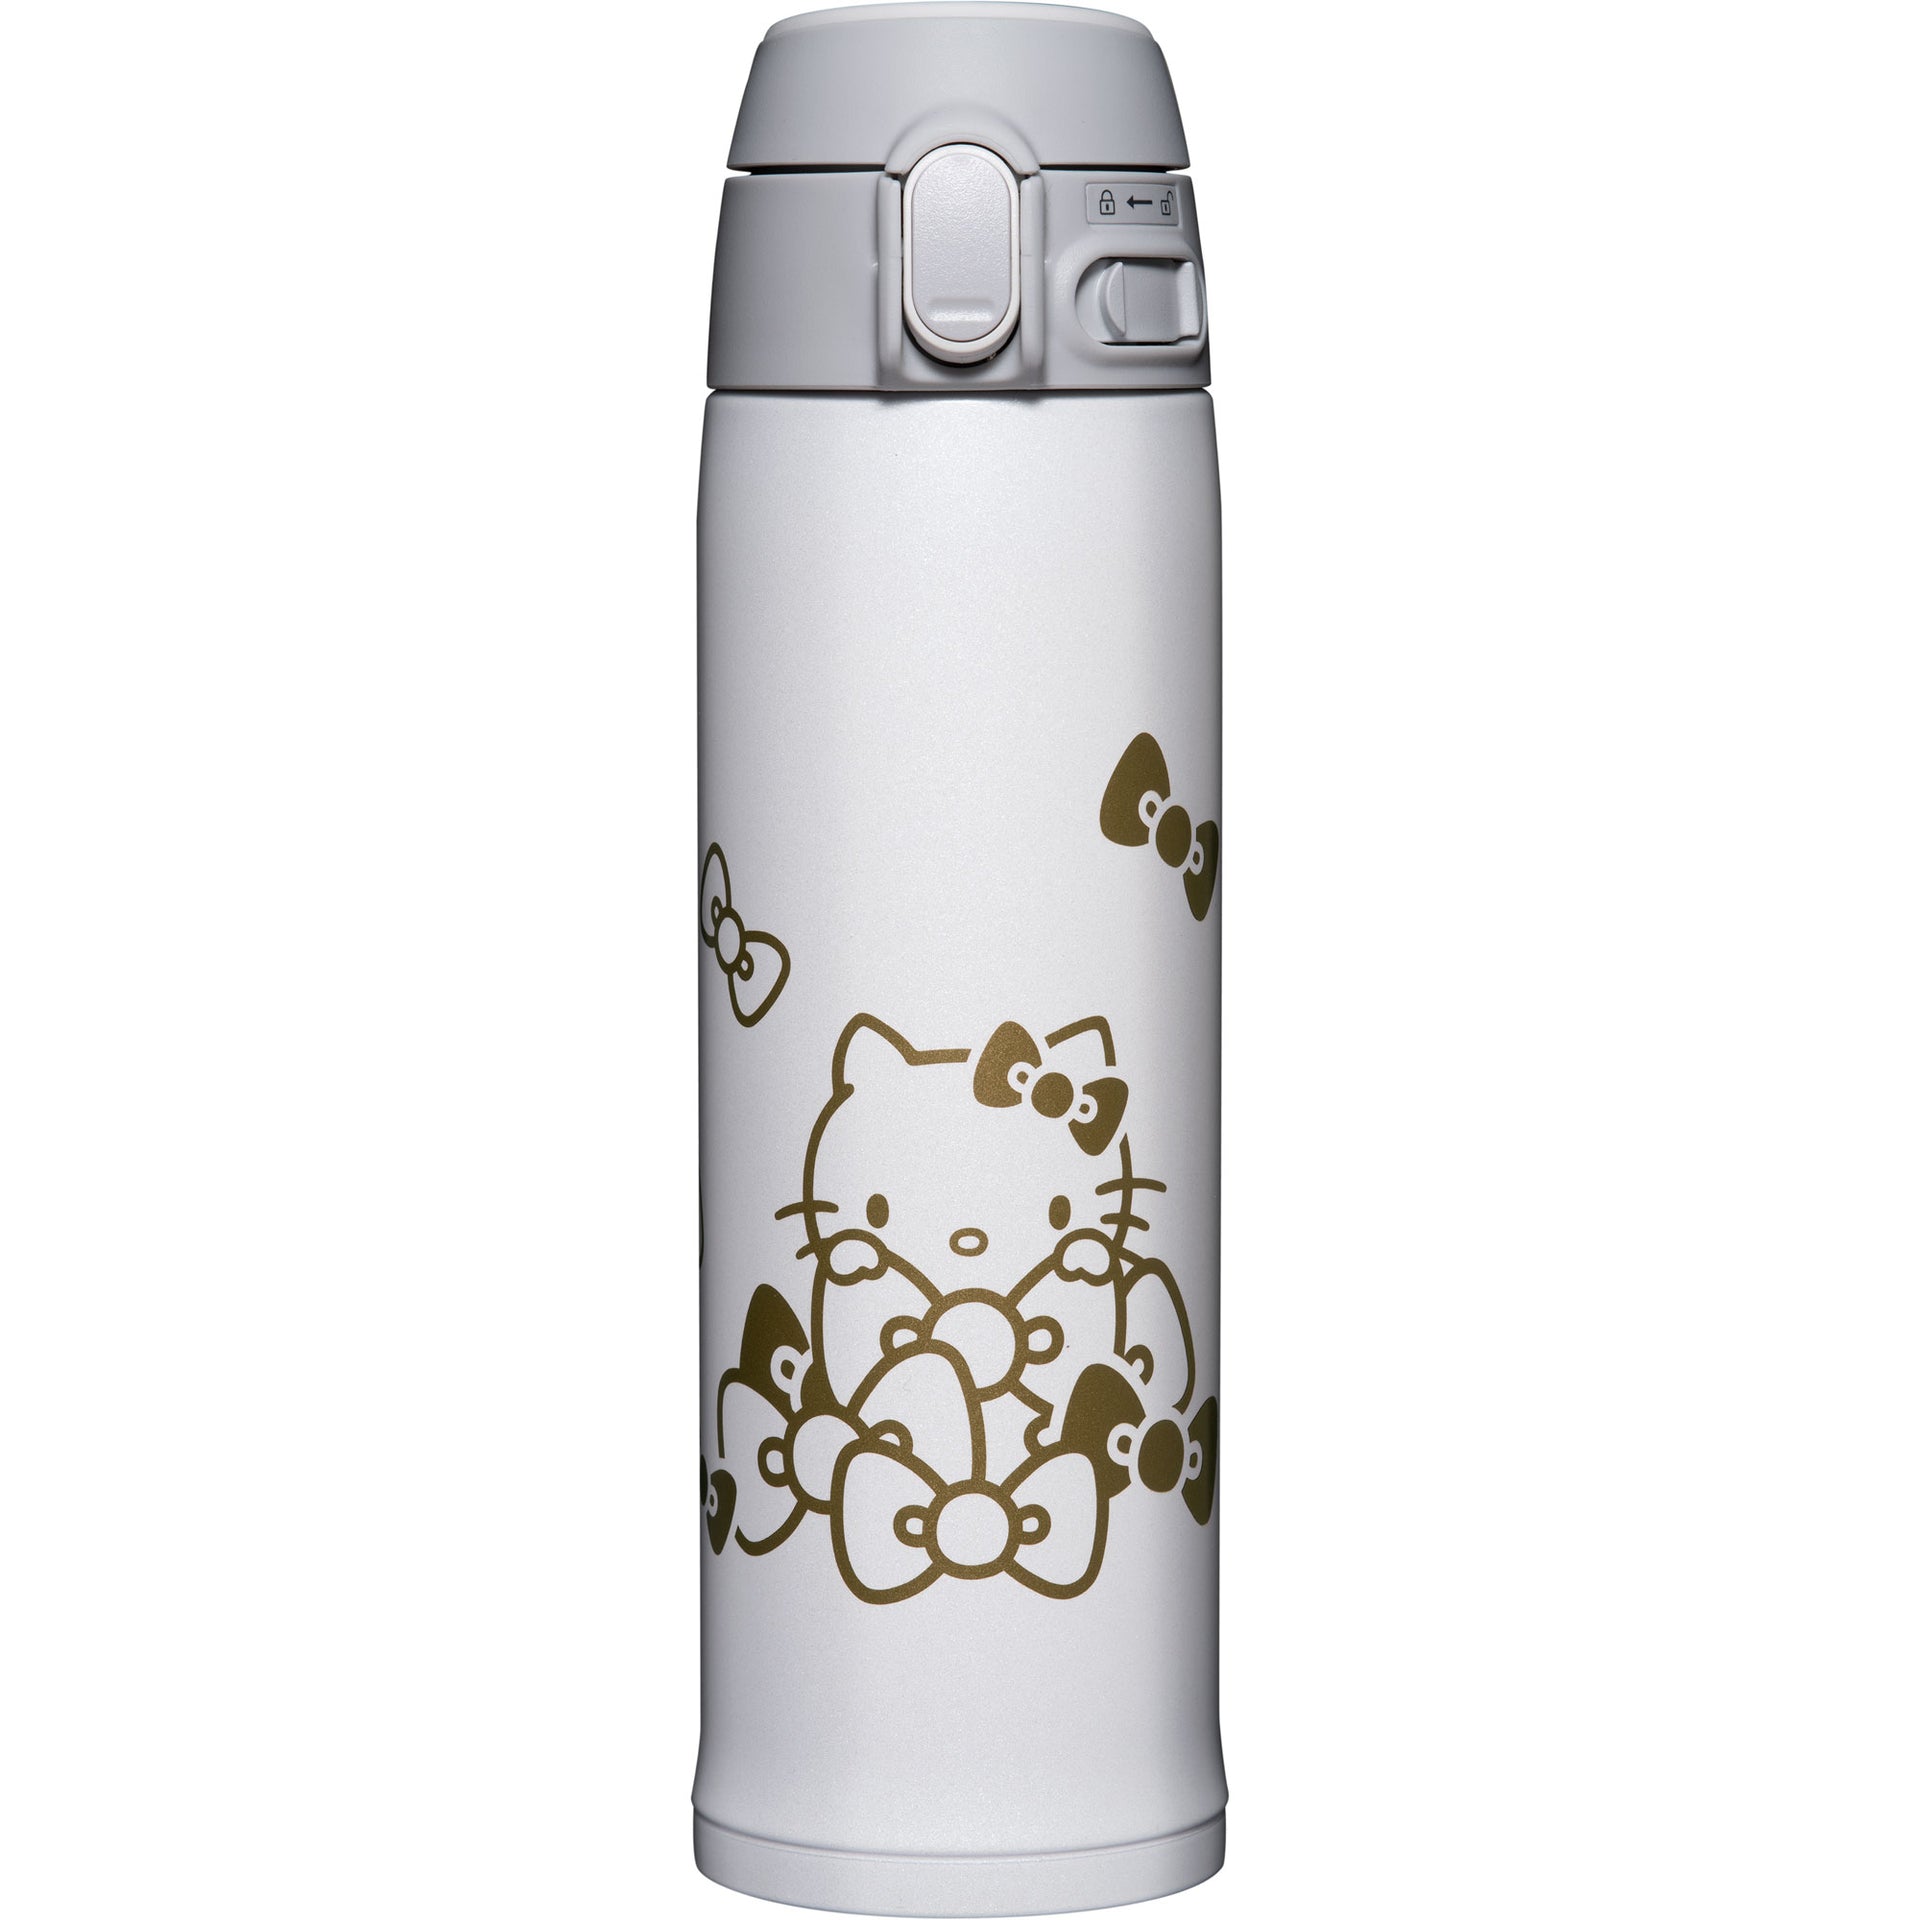 Zojirushi Japan Thermos Bottle 1L vacuum glass flask water jug thermal pot  Hot H